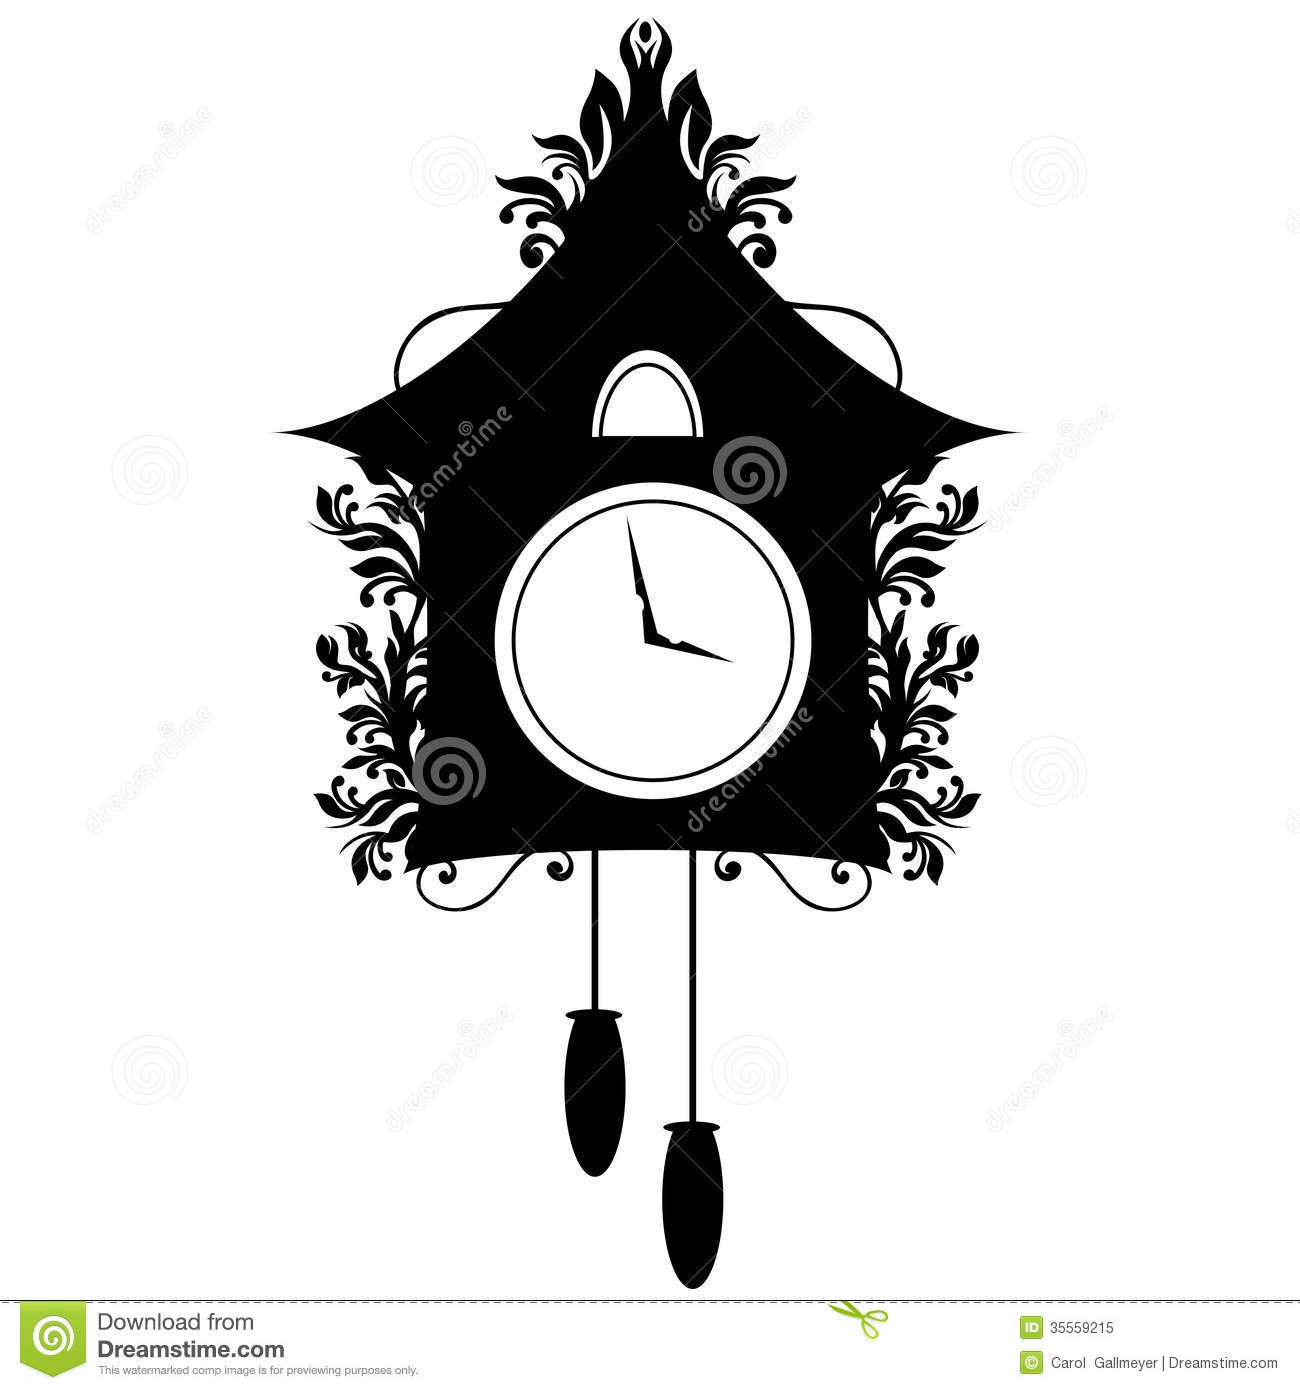 Ornate Cuckoo Clock Silhouette Royalty Free Stock Photo   Image